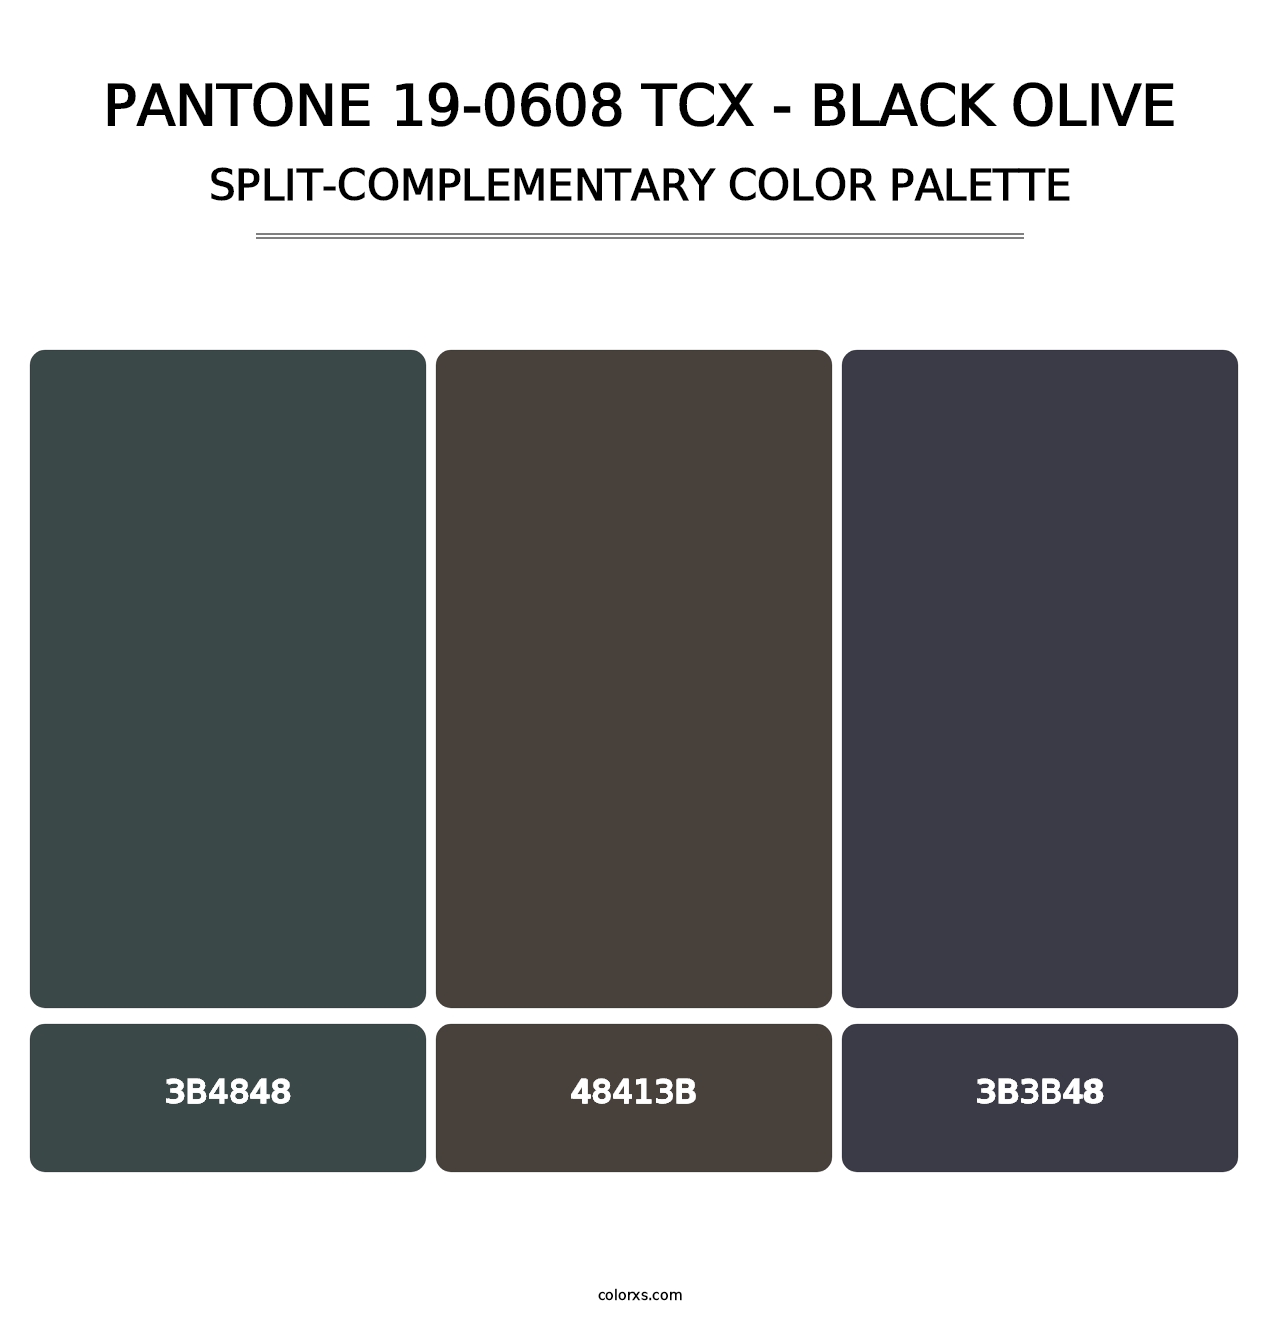 PANTONE 19-0608 TCX - Black Olive - Split-Complementary Color Palette